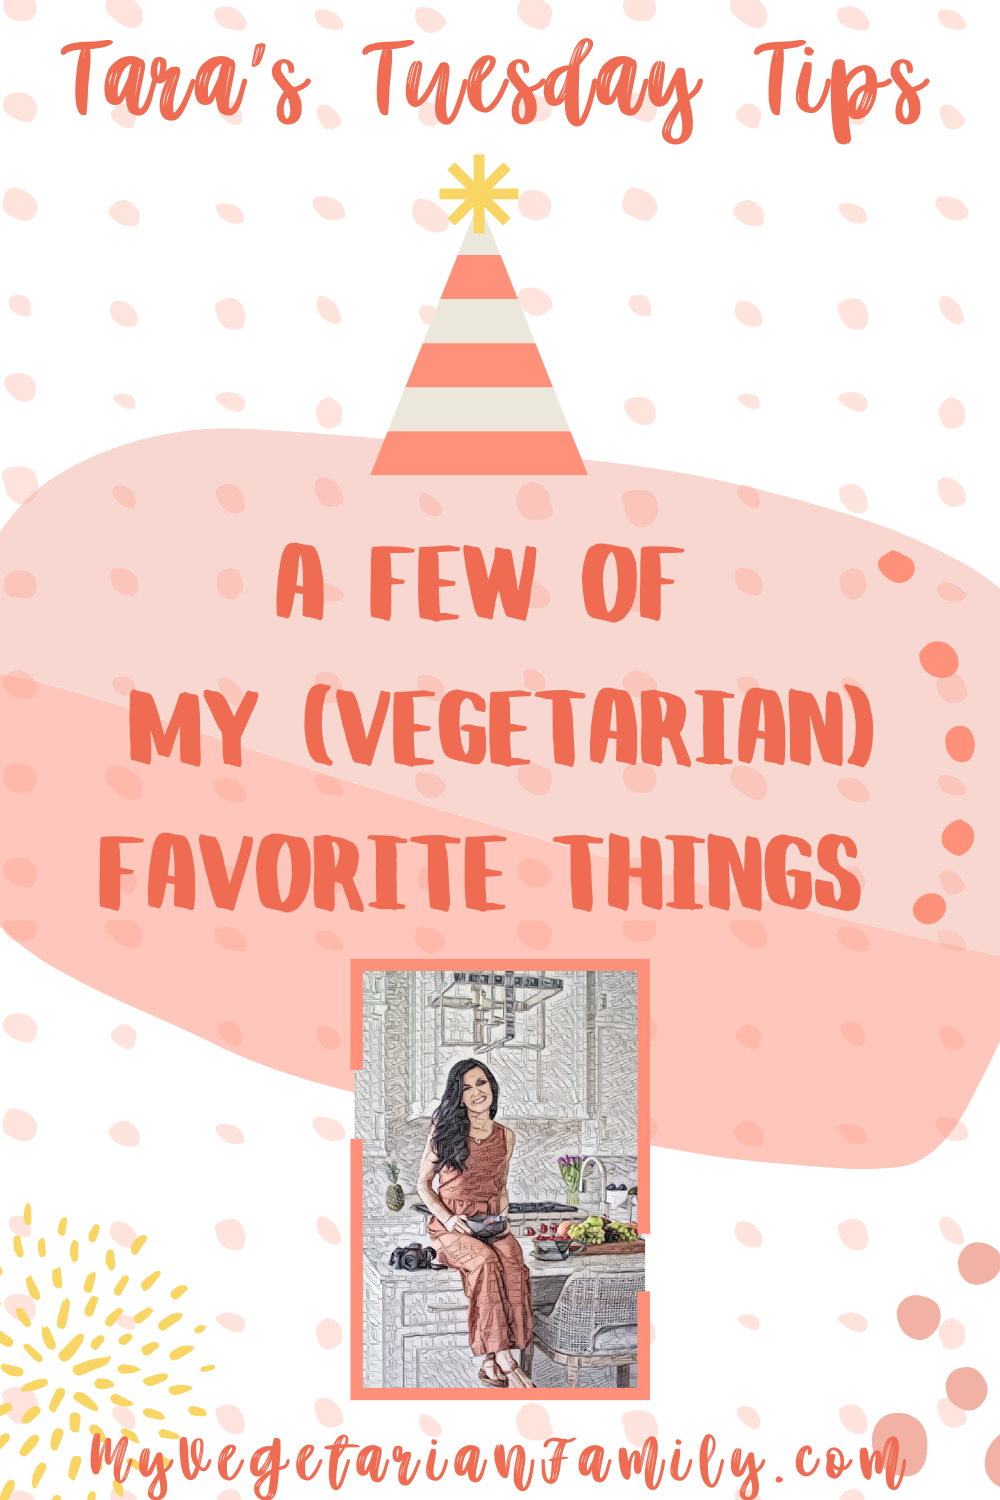 My Favorite Things Vegetarian | Tara's Tuesday Tips | My Vegetarian Family #tarastuesdaytips #favoritethingsvegetarian